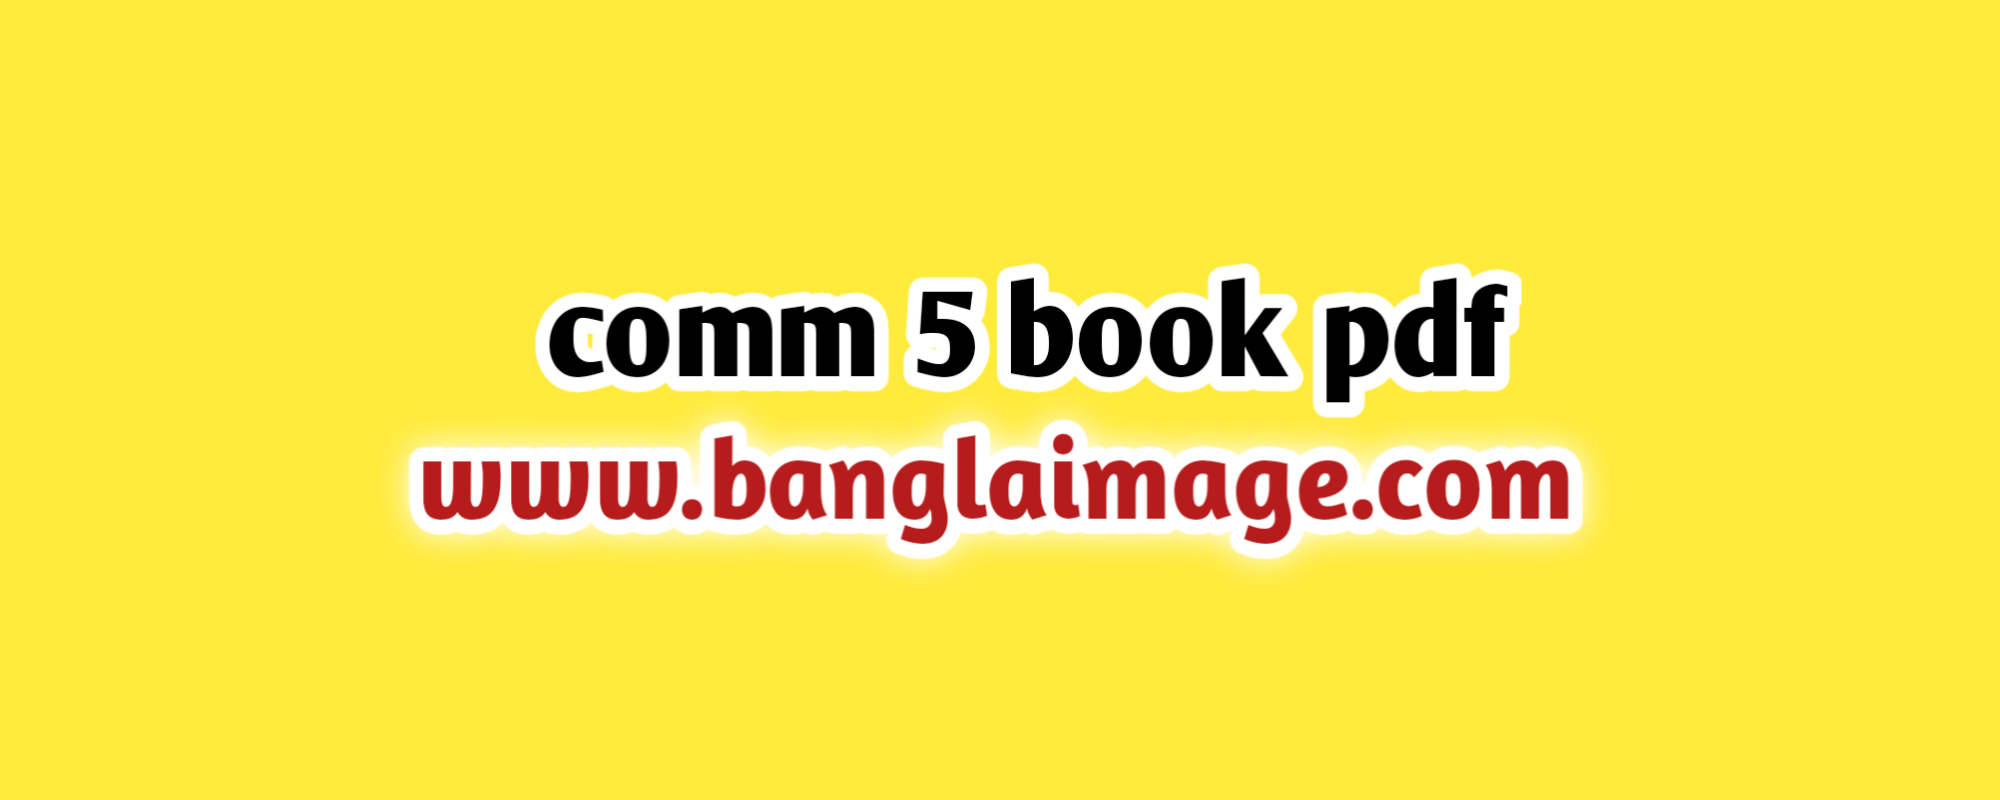 comm 5 book pdf, comm 5th edition pdf free, comm5 speech communication, the comm 5th edition pdf free